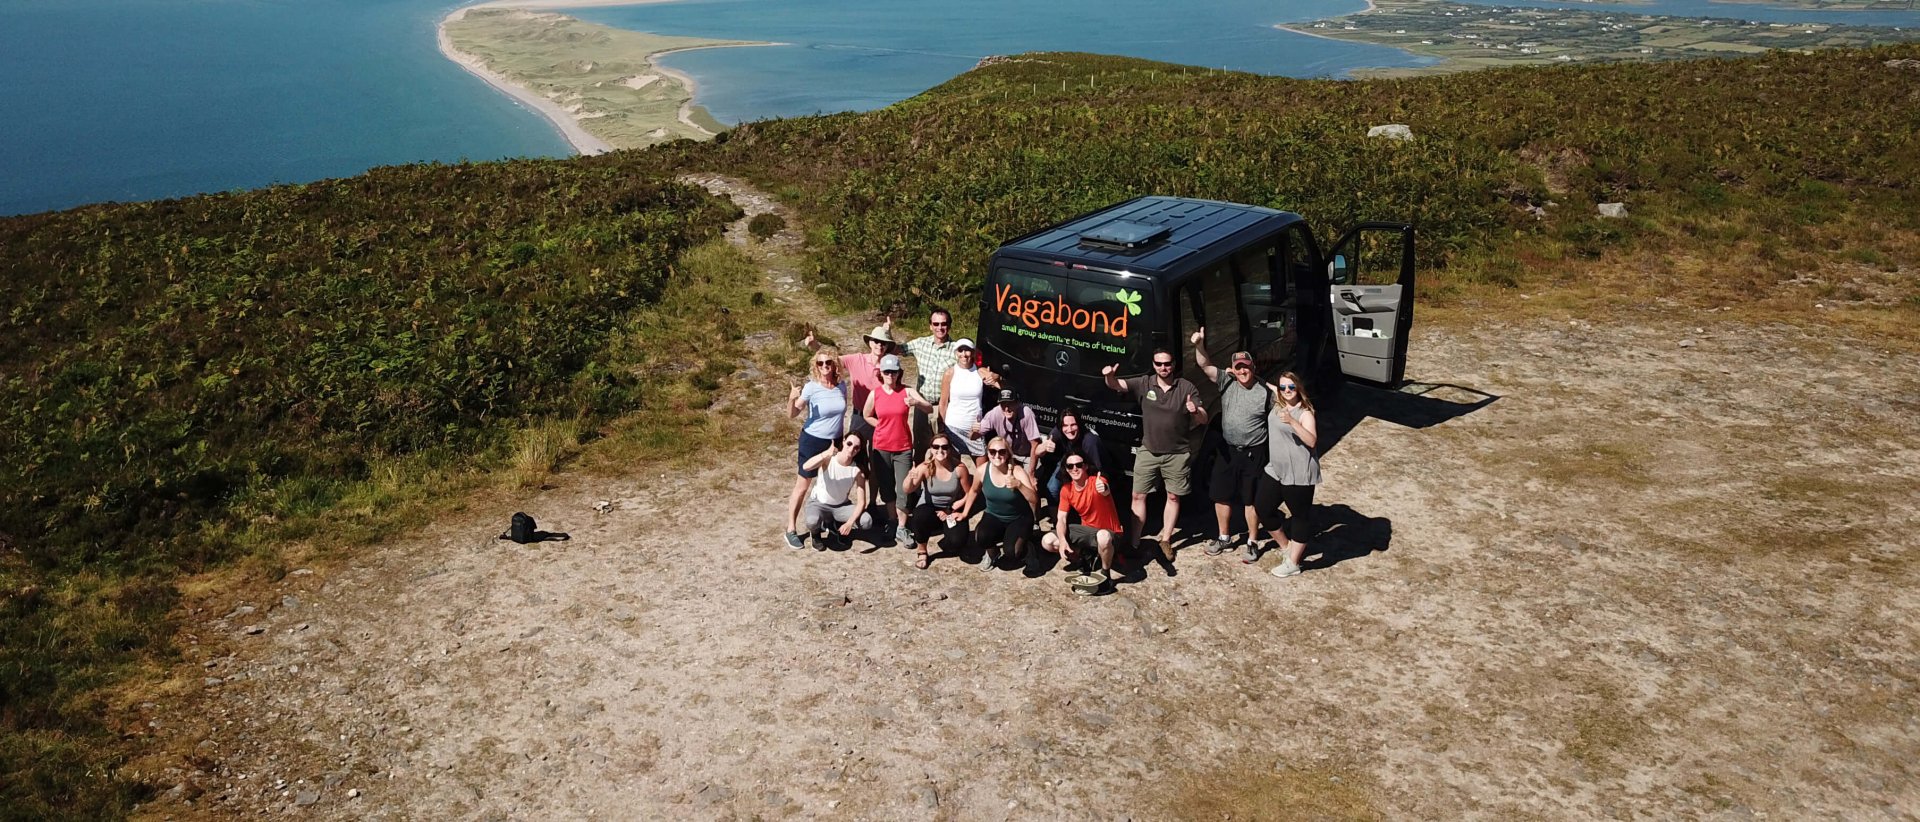 Ireland – Small-Group Tours Ireland